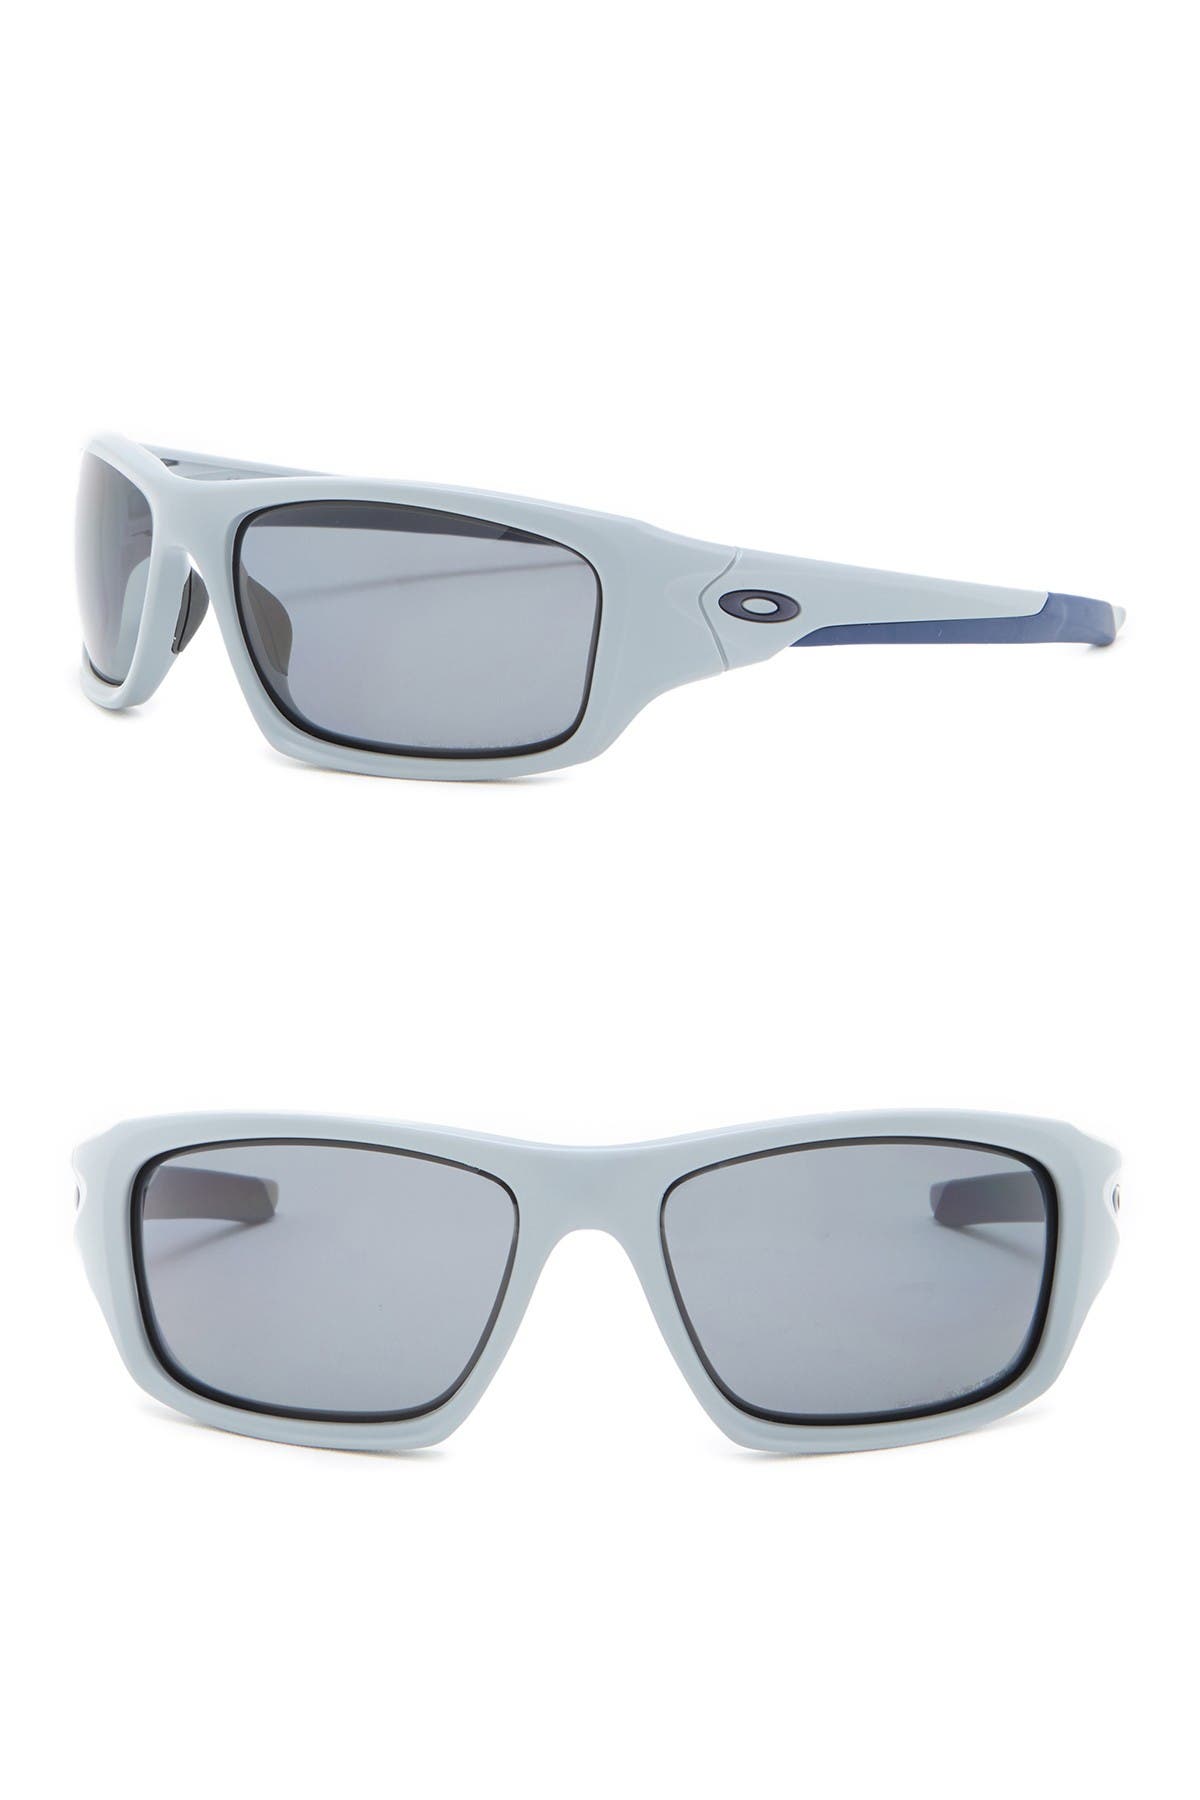 Oakley | Valve 60mm Sunglasses 